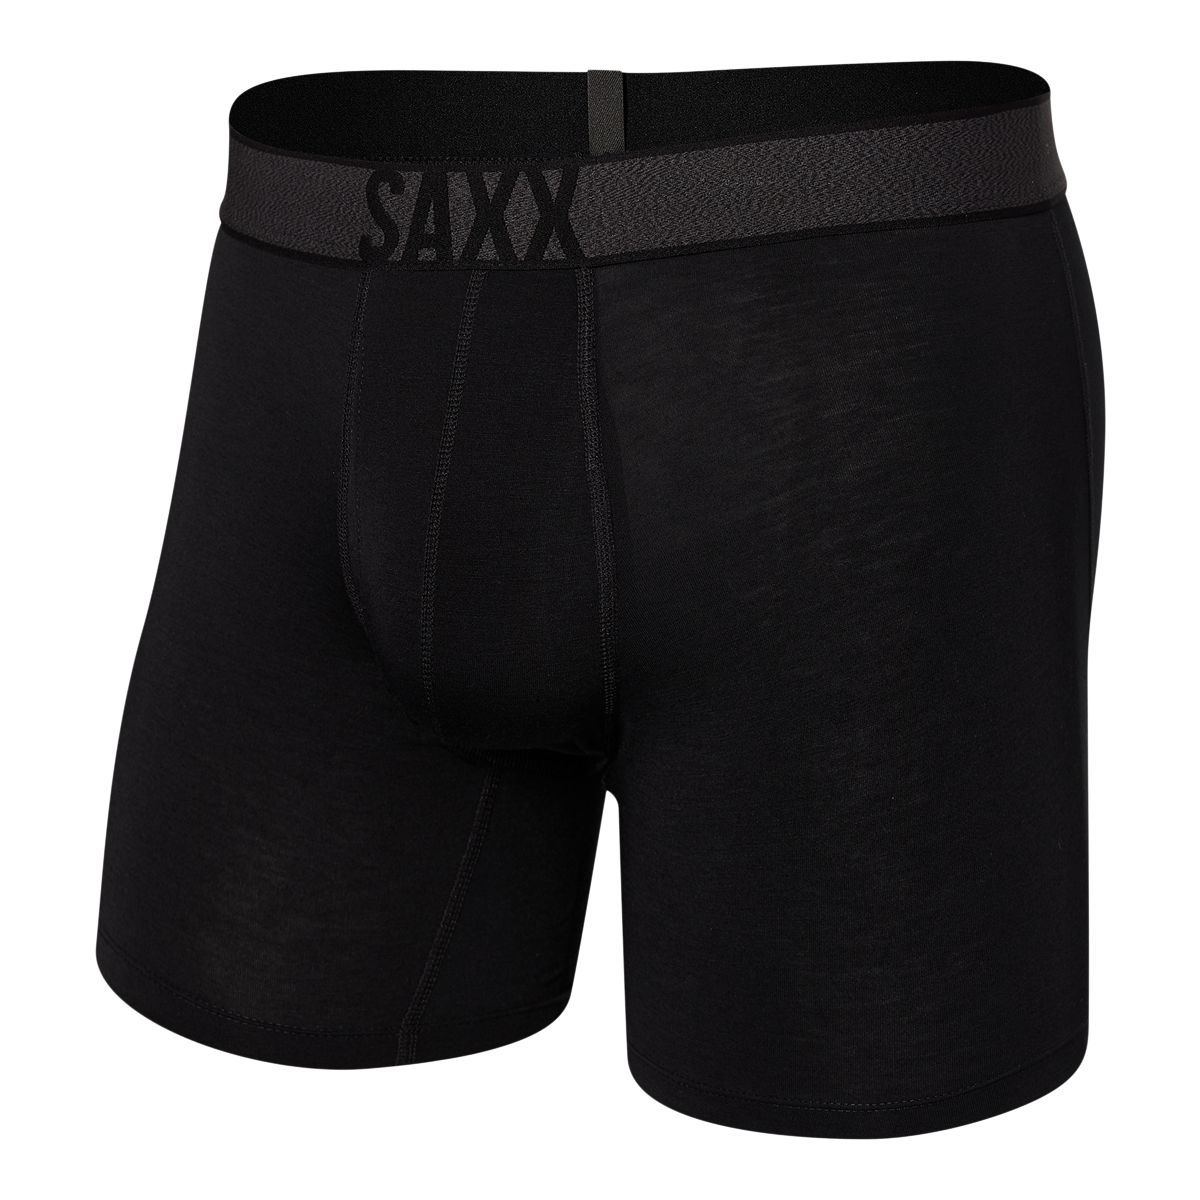 Saxx Men's Roastmaster Boxer Brief